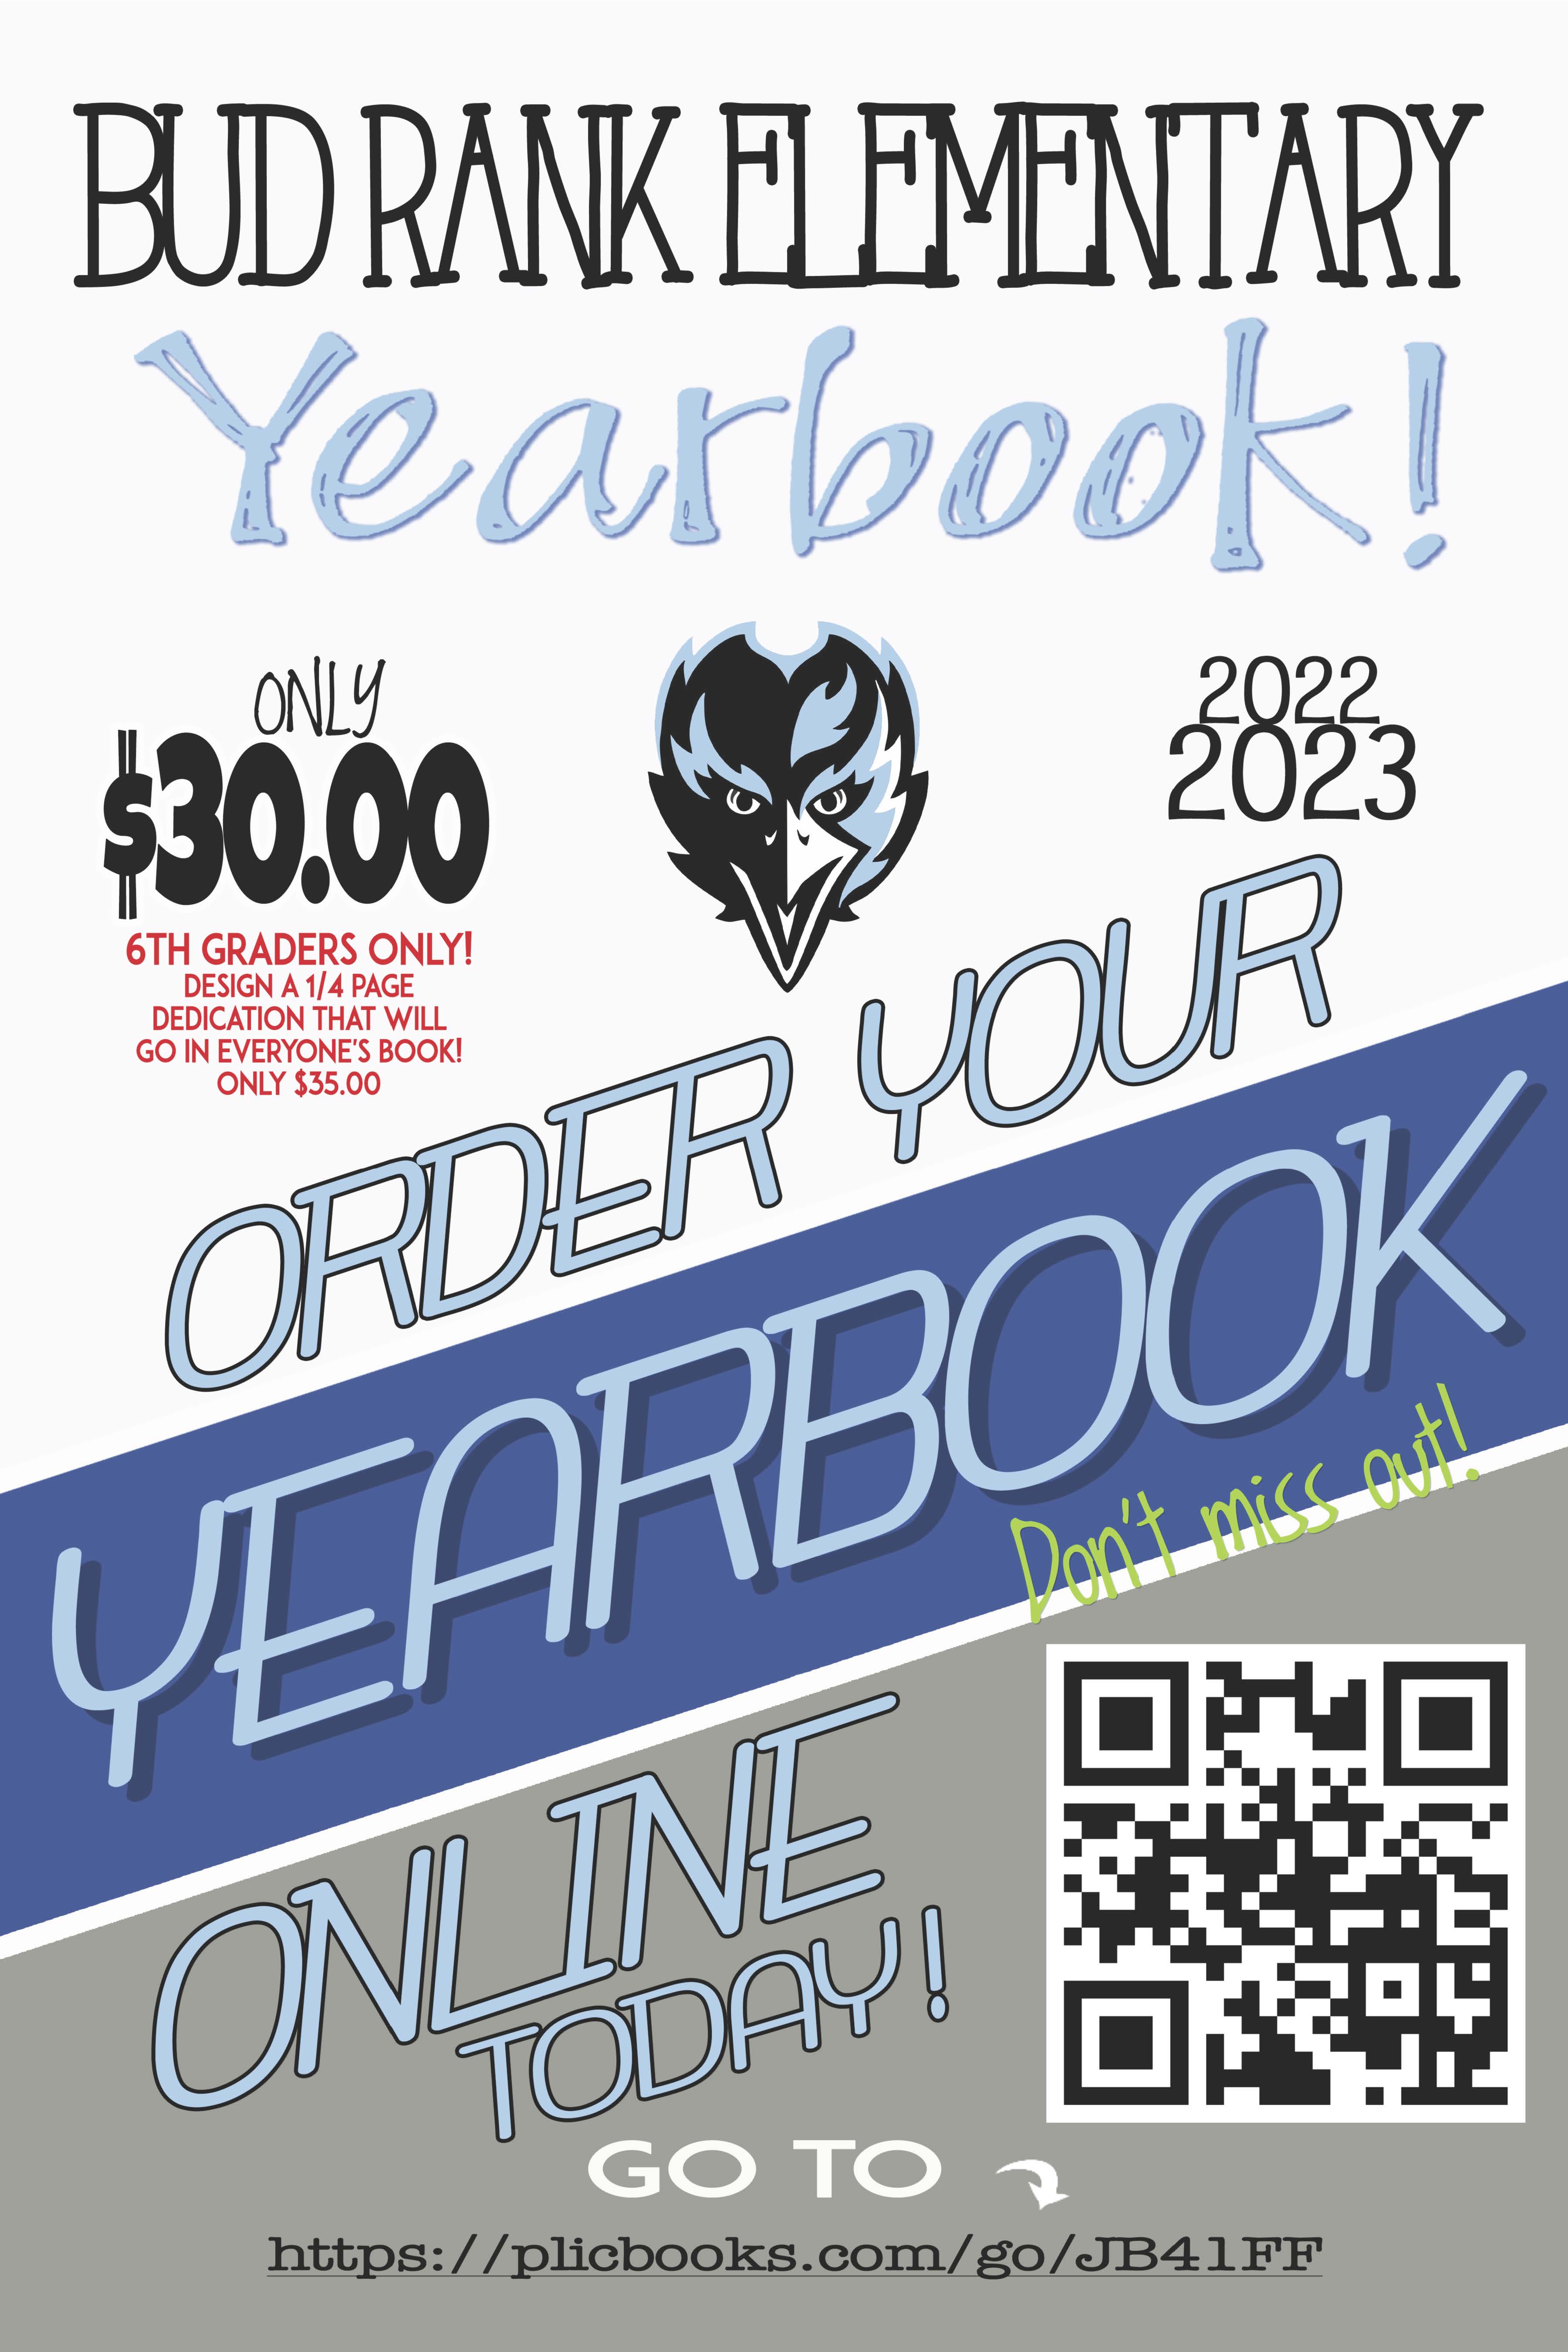 Bud Rank Yearbook Flyer